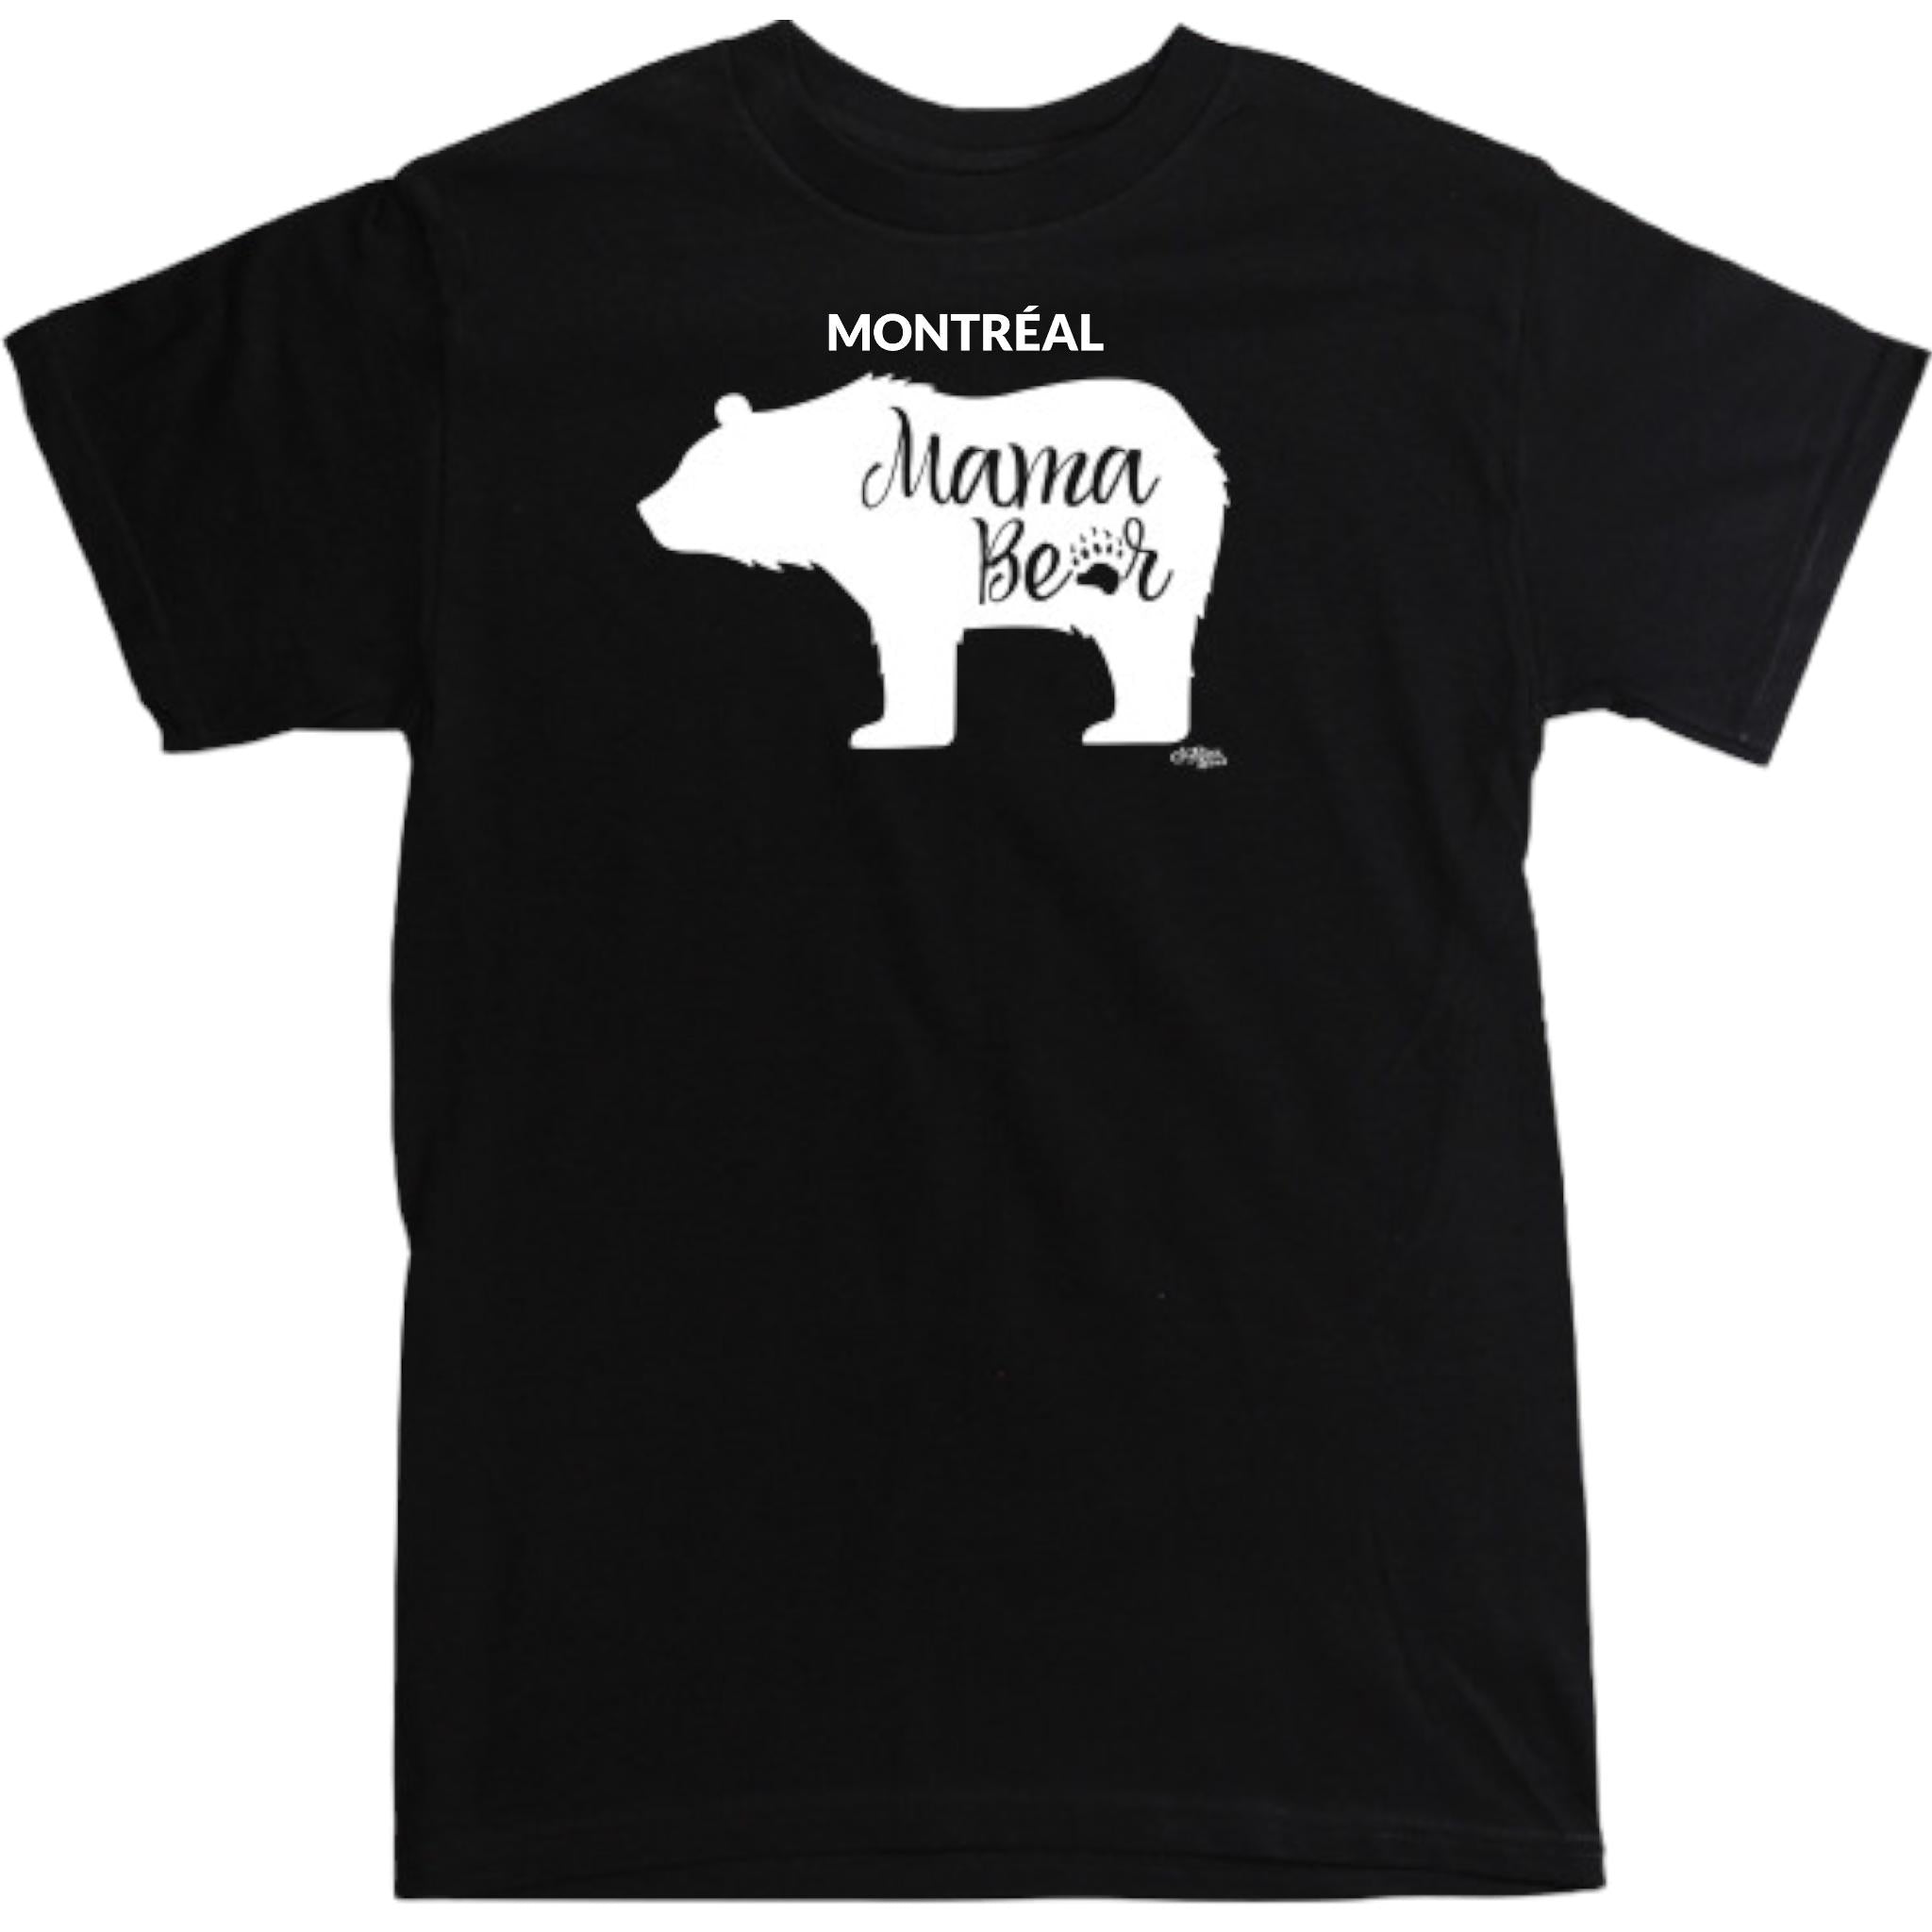 Black Mama Bear Tee W/ Montreal Name Drop - Ladies T-shirt